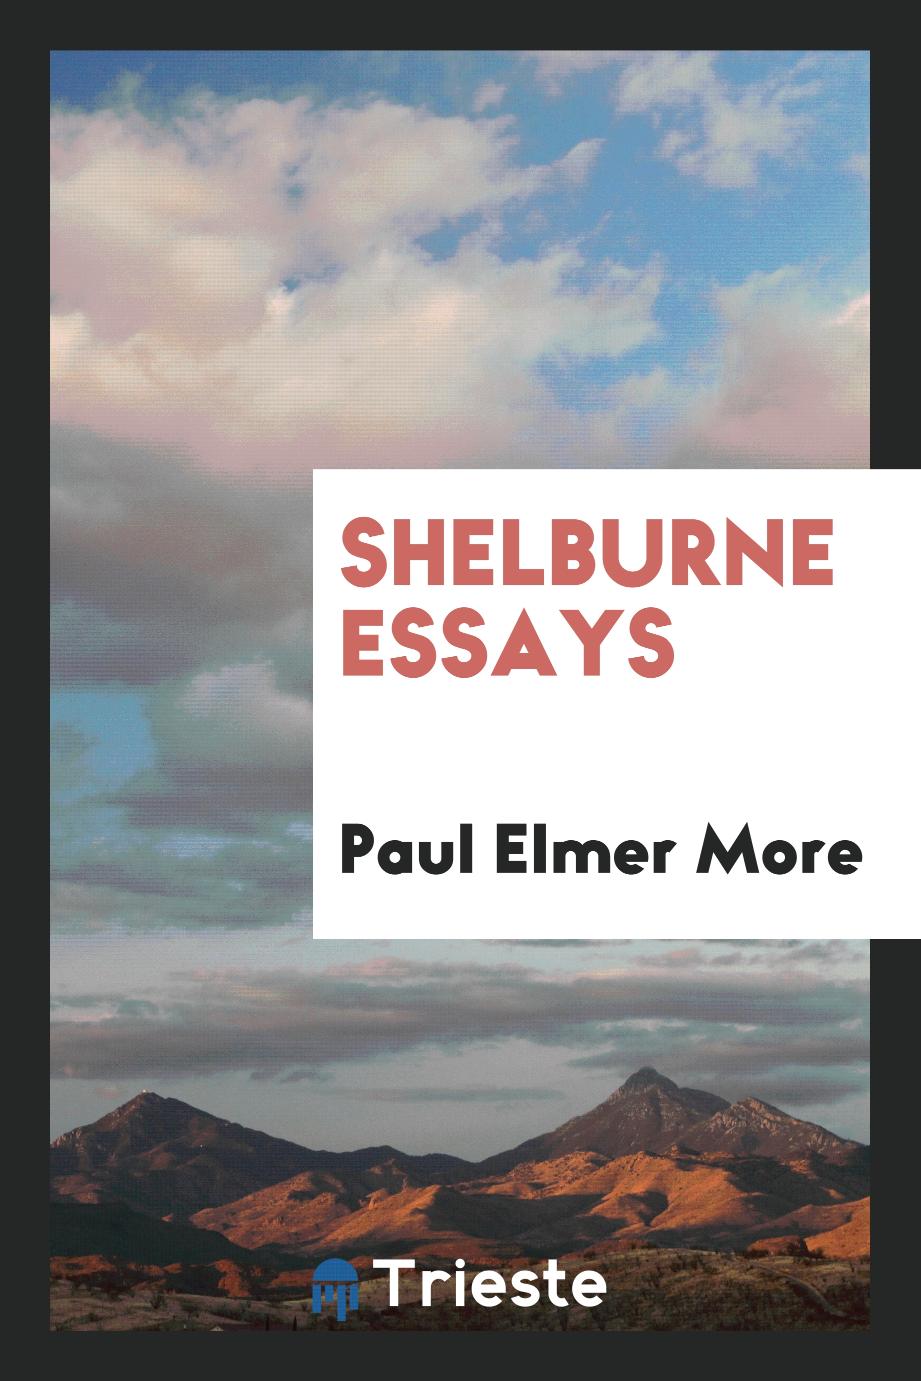 Shelburne essays